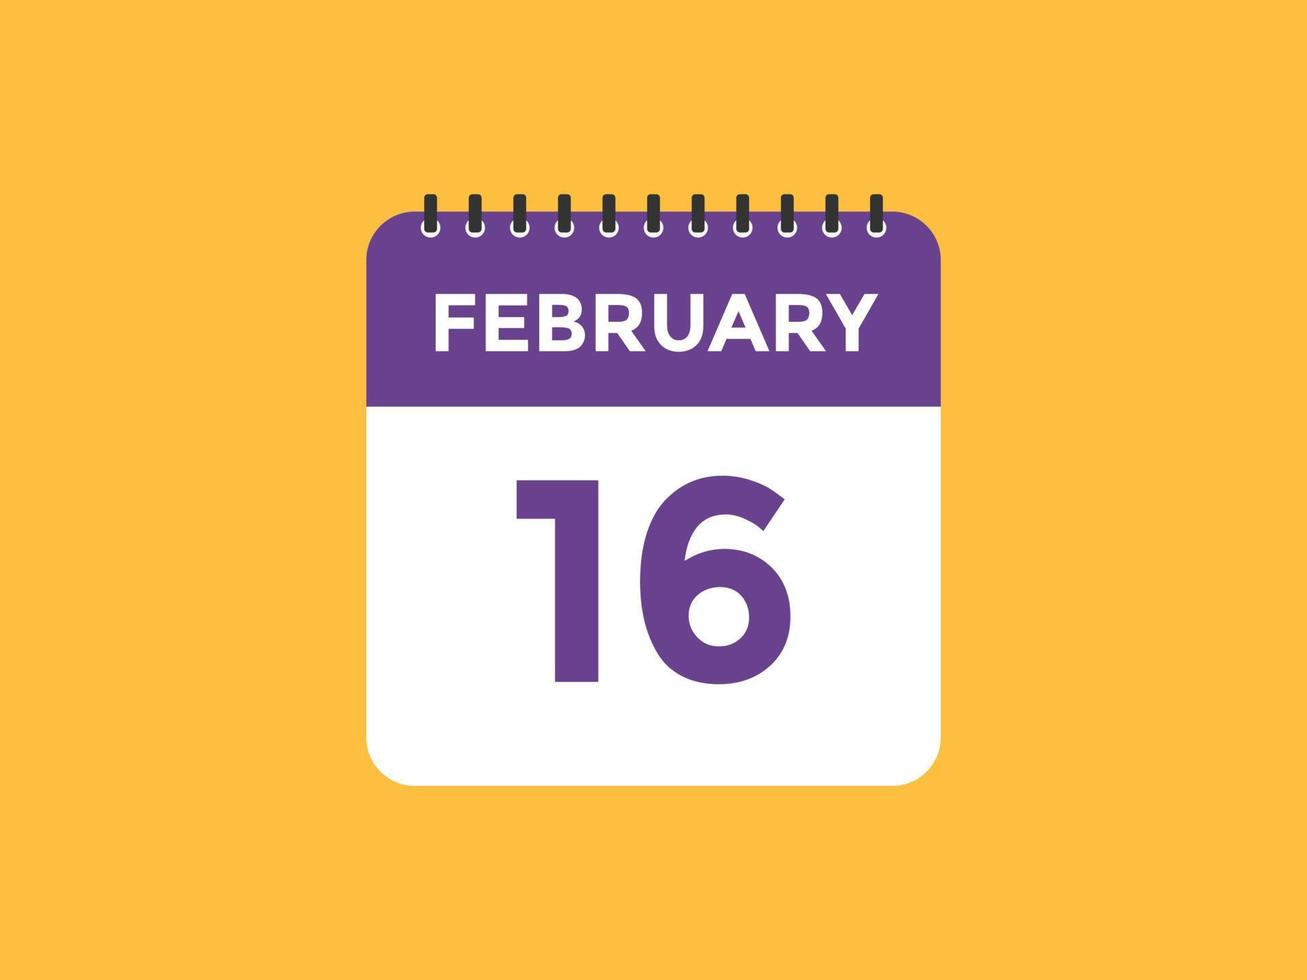 16. Februar Kalendererinnerung. 16. februar tägliche kalendersymbolvorlage. Kalender 16. Februar Icon-Design-Vorlage. Vektor-Illustration vektor